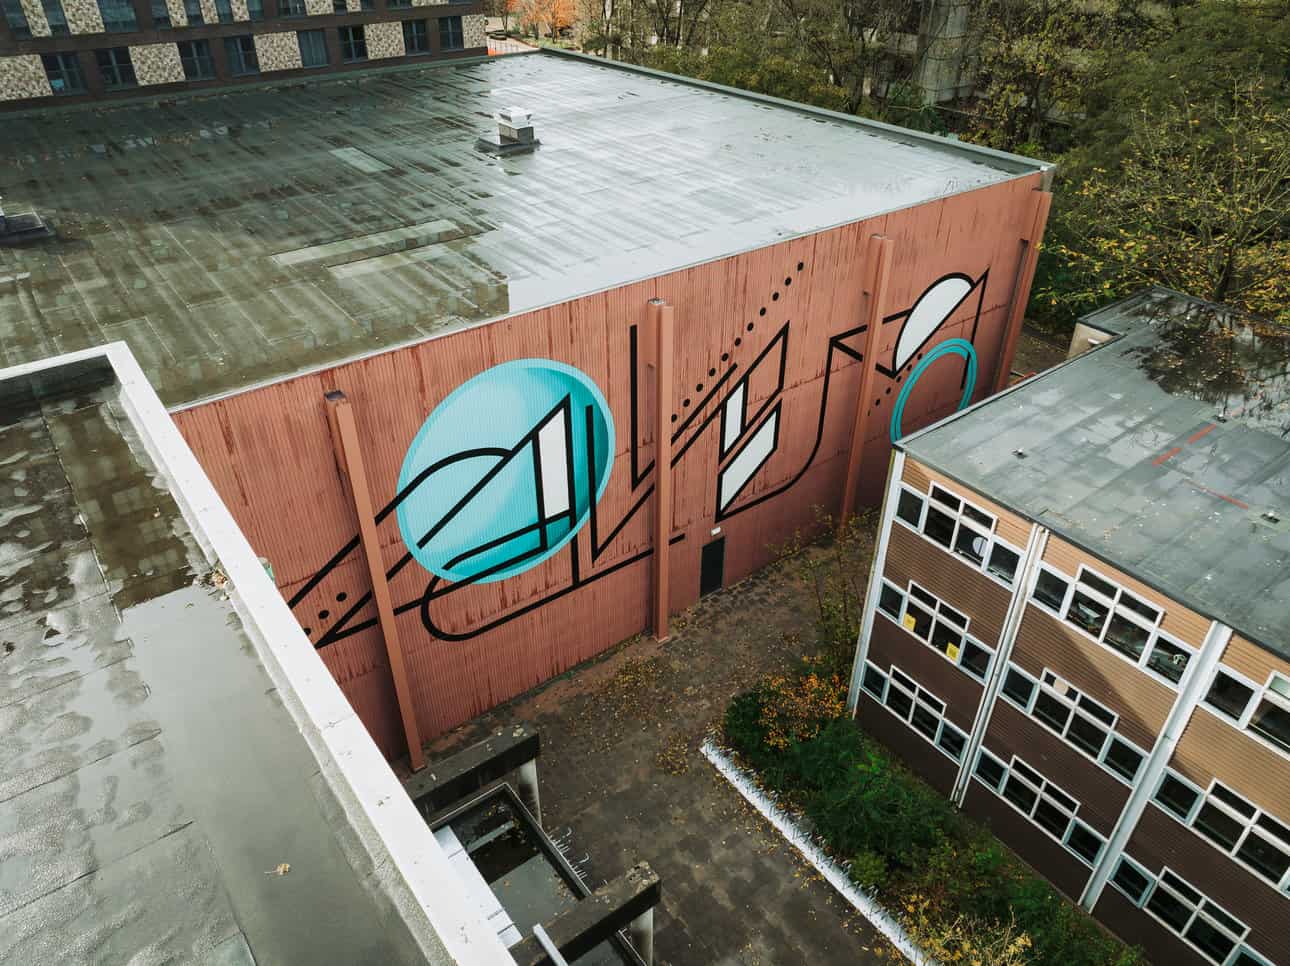 Erasmus University Rotterdam commemorates 110th anniversary with street-art. Photo credit: Alexander Santos Lima